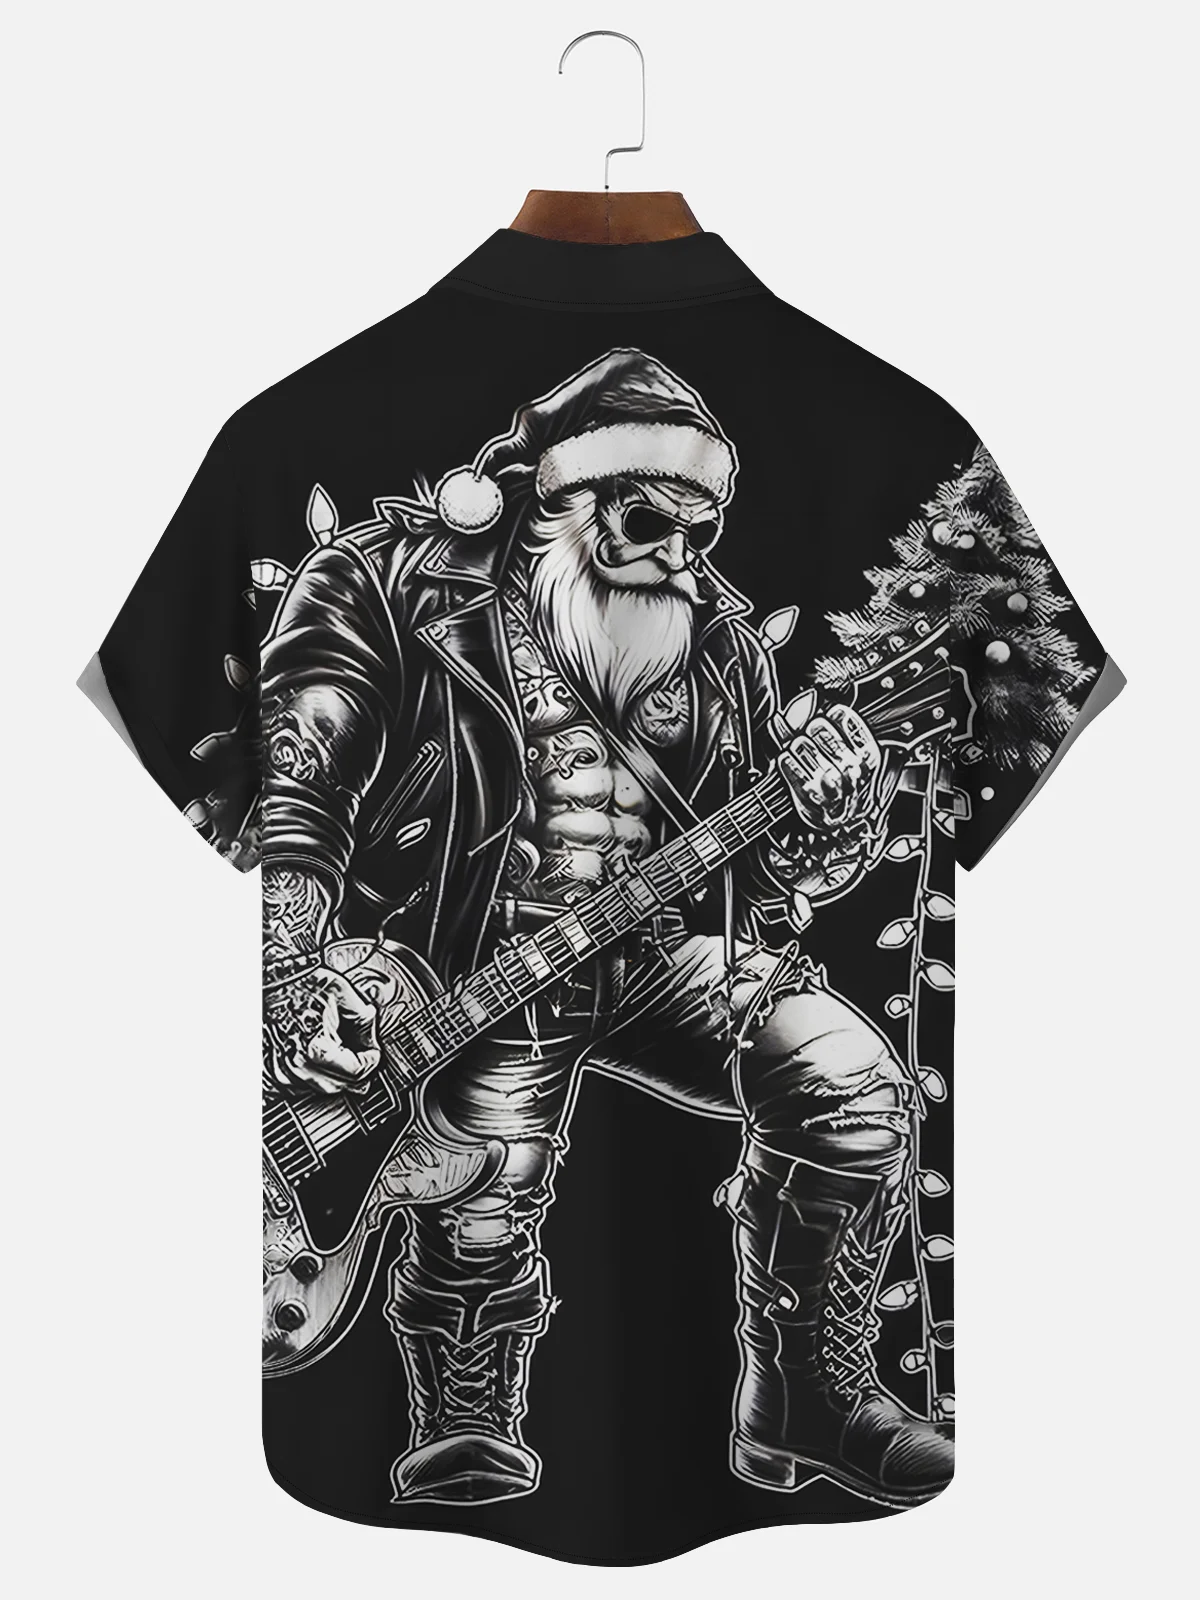 Royaura Christmas Holiday Black Men's Shirts Santa Claus Cartoon Rock Music Stretch Easy Care Camp Pocket Shirts